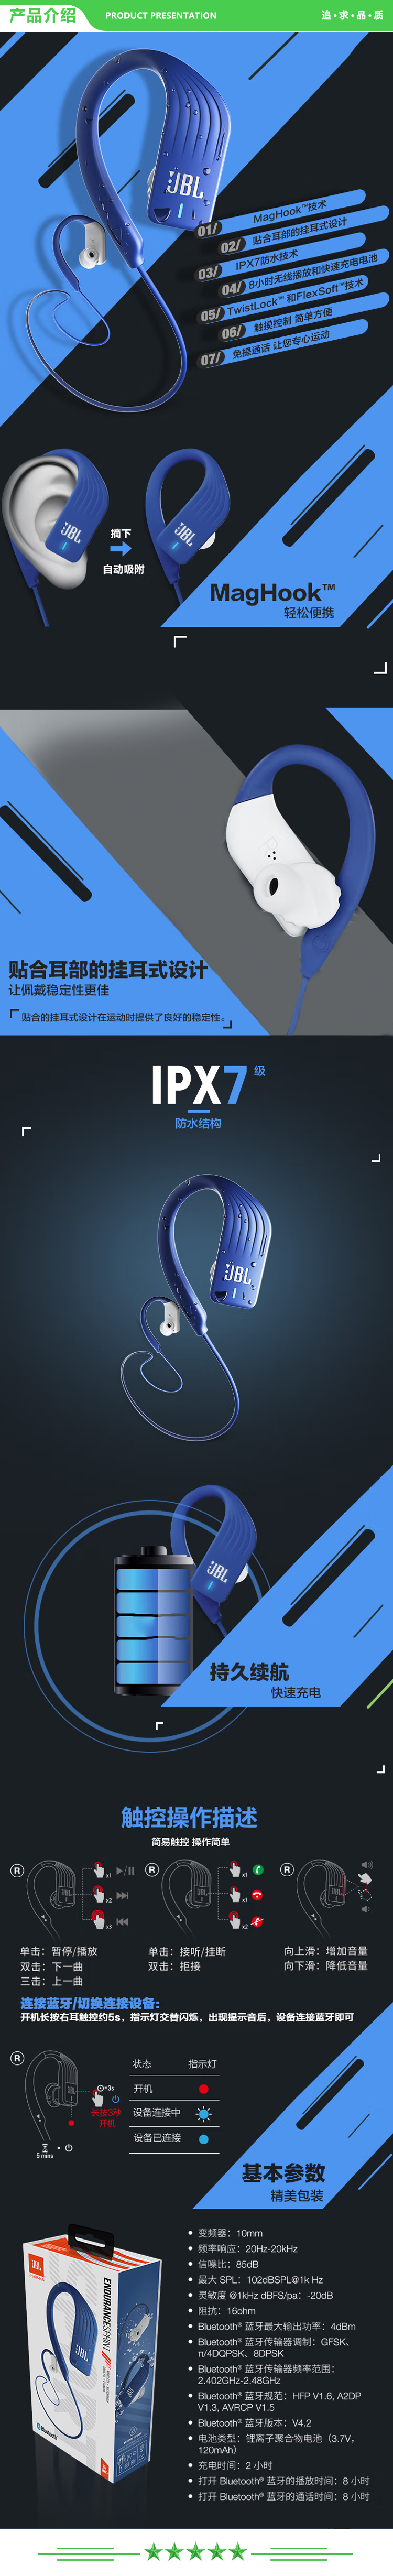 JBL Sprint黑色 蓝牙耳机挂脖式 无线运动耳机 防水防汗 苹果华为小米安卓游戏音乐通用耳机 .jpg